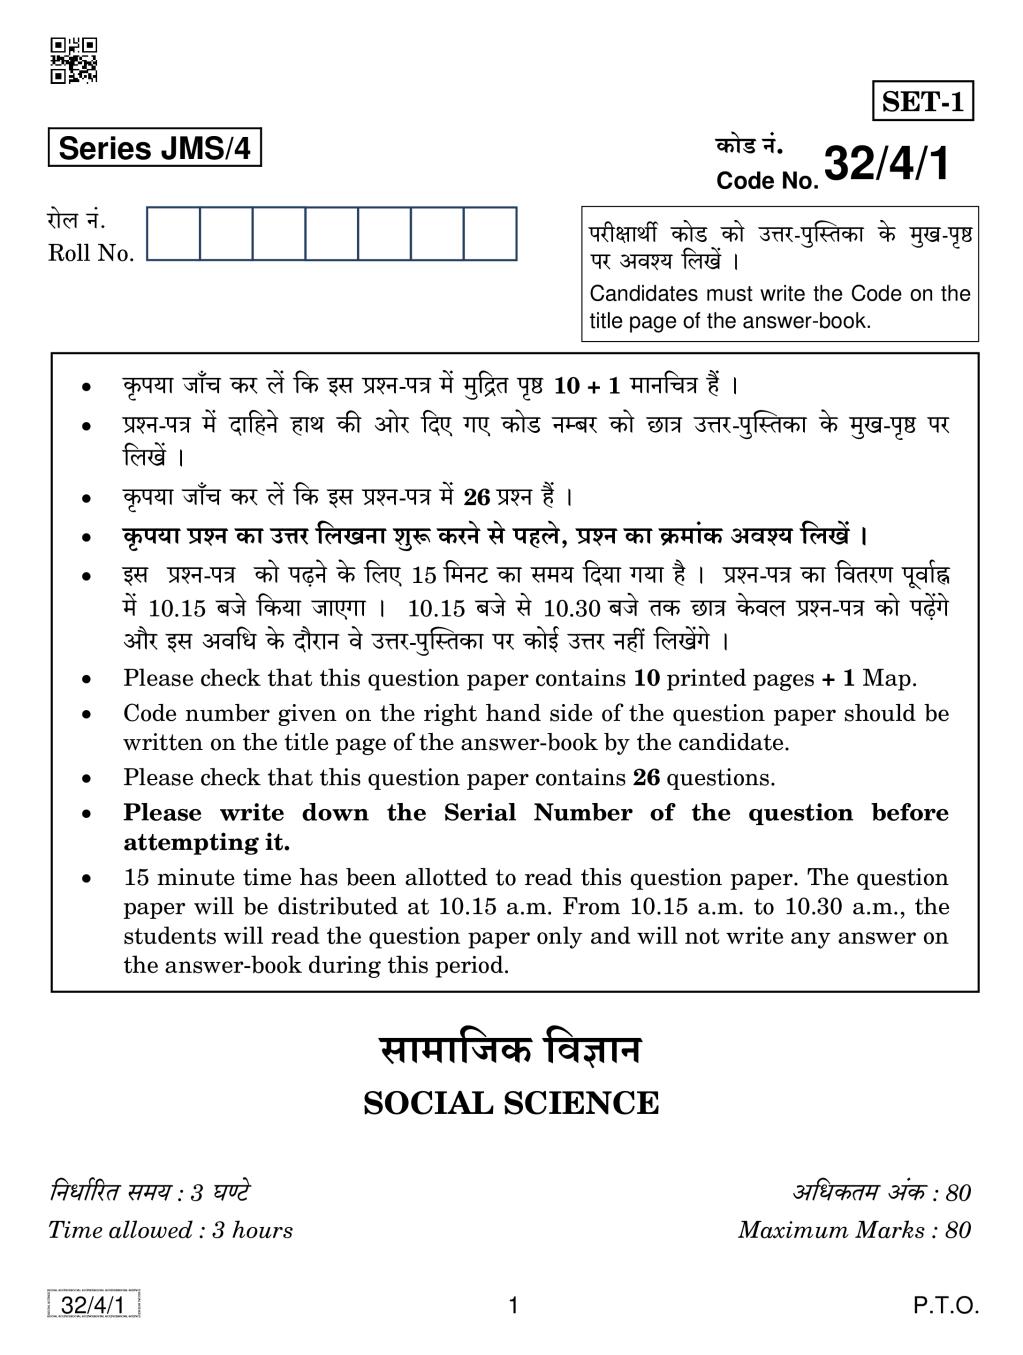 CBSE Class 10 Social Science Question Paper 2019 Set 4 - Page 1